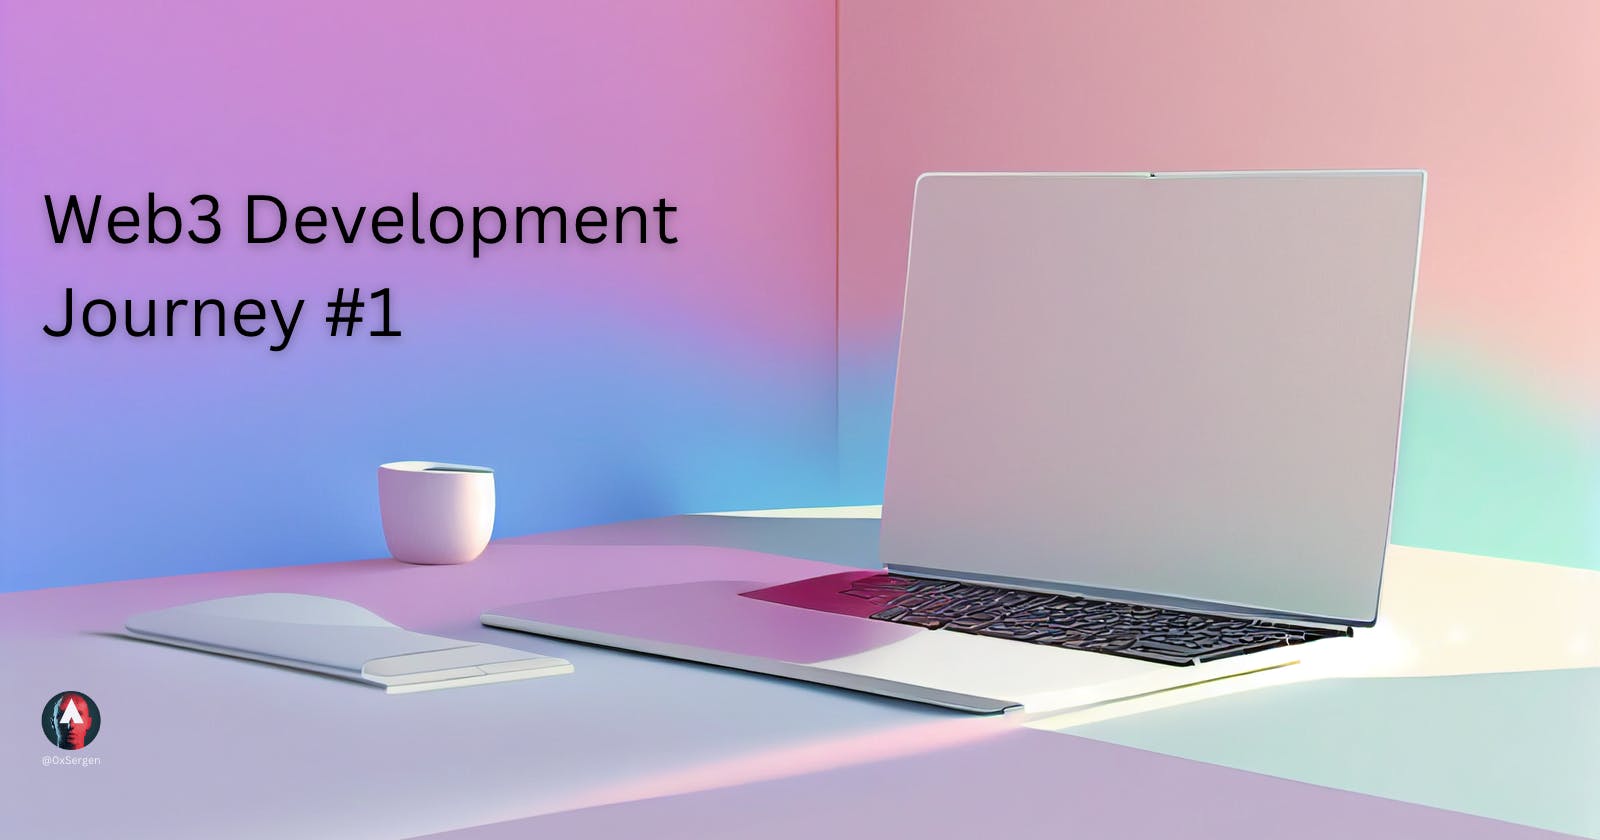 Web3 Development Journey #1